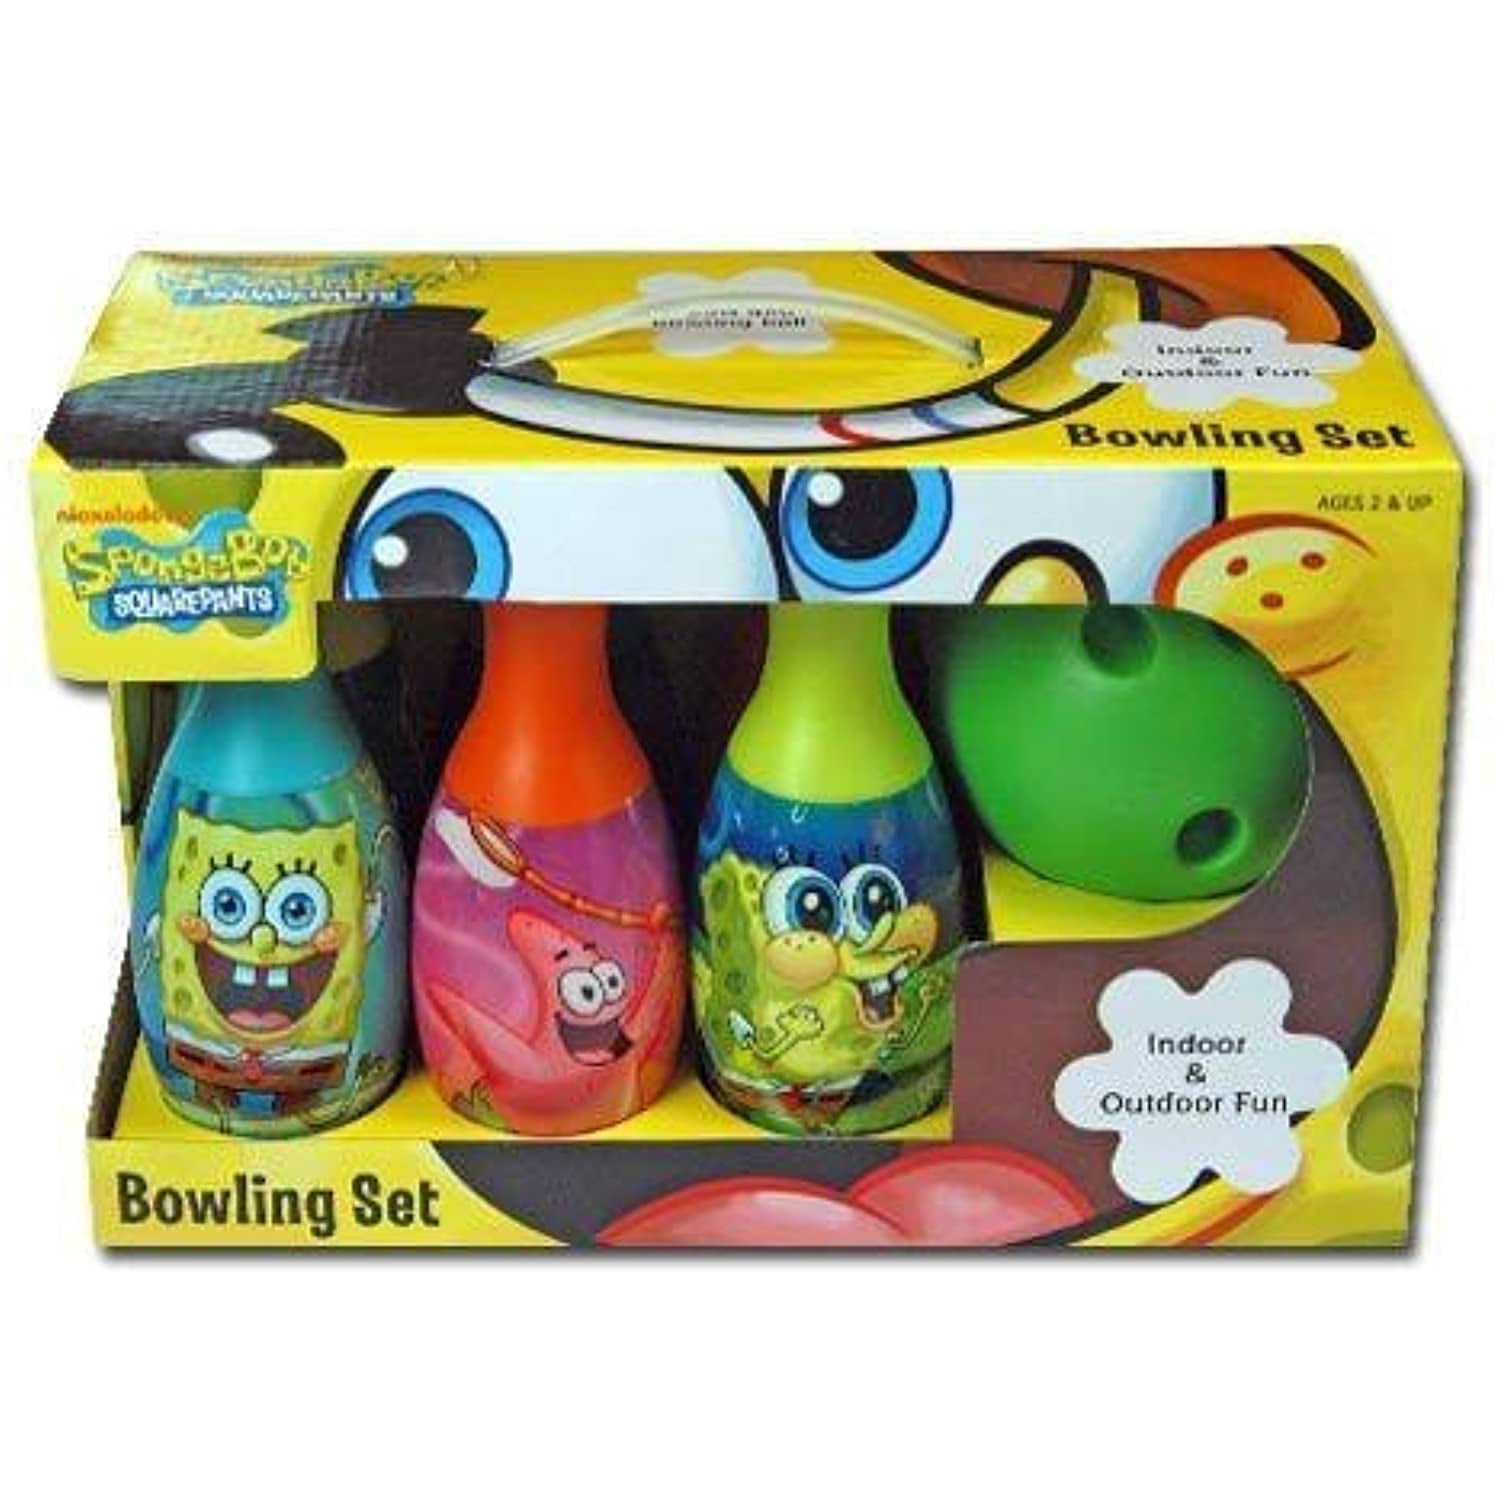 SpongeBob Squarepants Bowling Set Toy Game Kids Birthday Gift Toy 6 Pins &1 Ball 